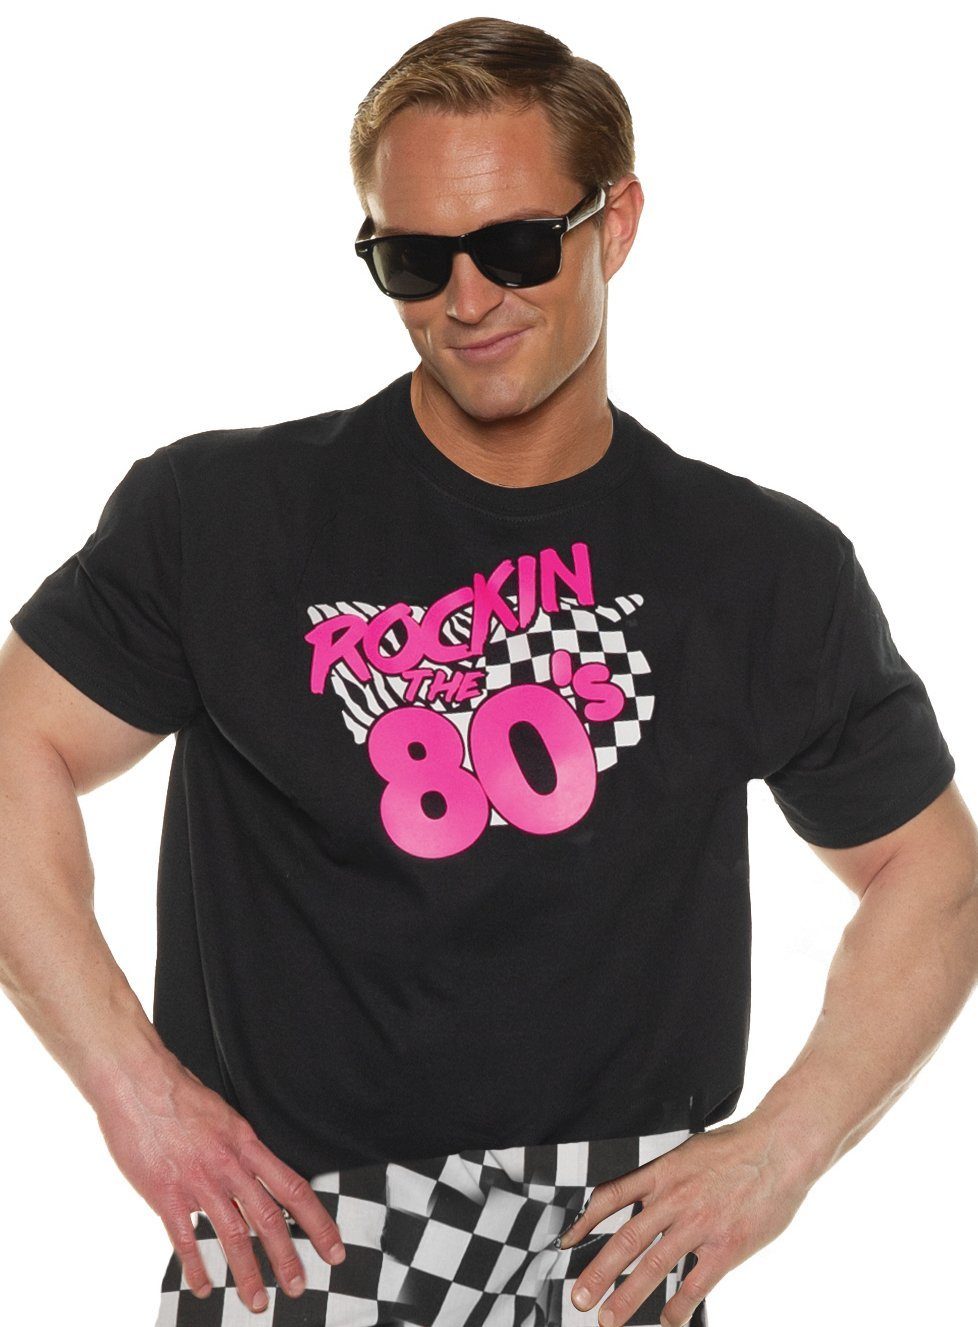 Underwraps T-Shirt 80er Jahre Shirt Rockin the 80's Oute Dich als Fan der 80er Jahre!